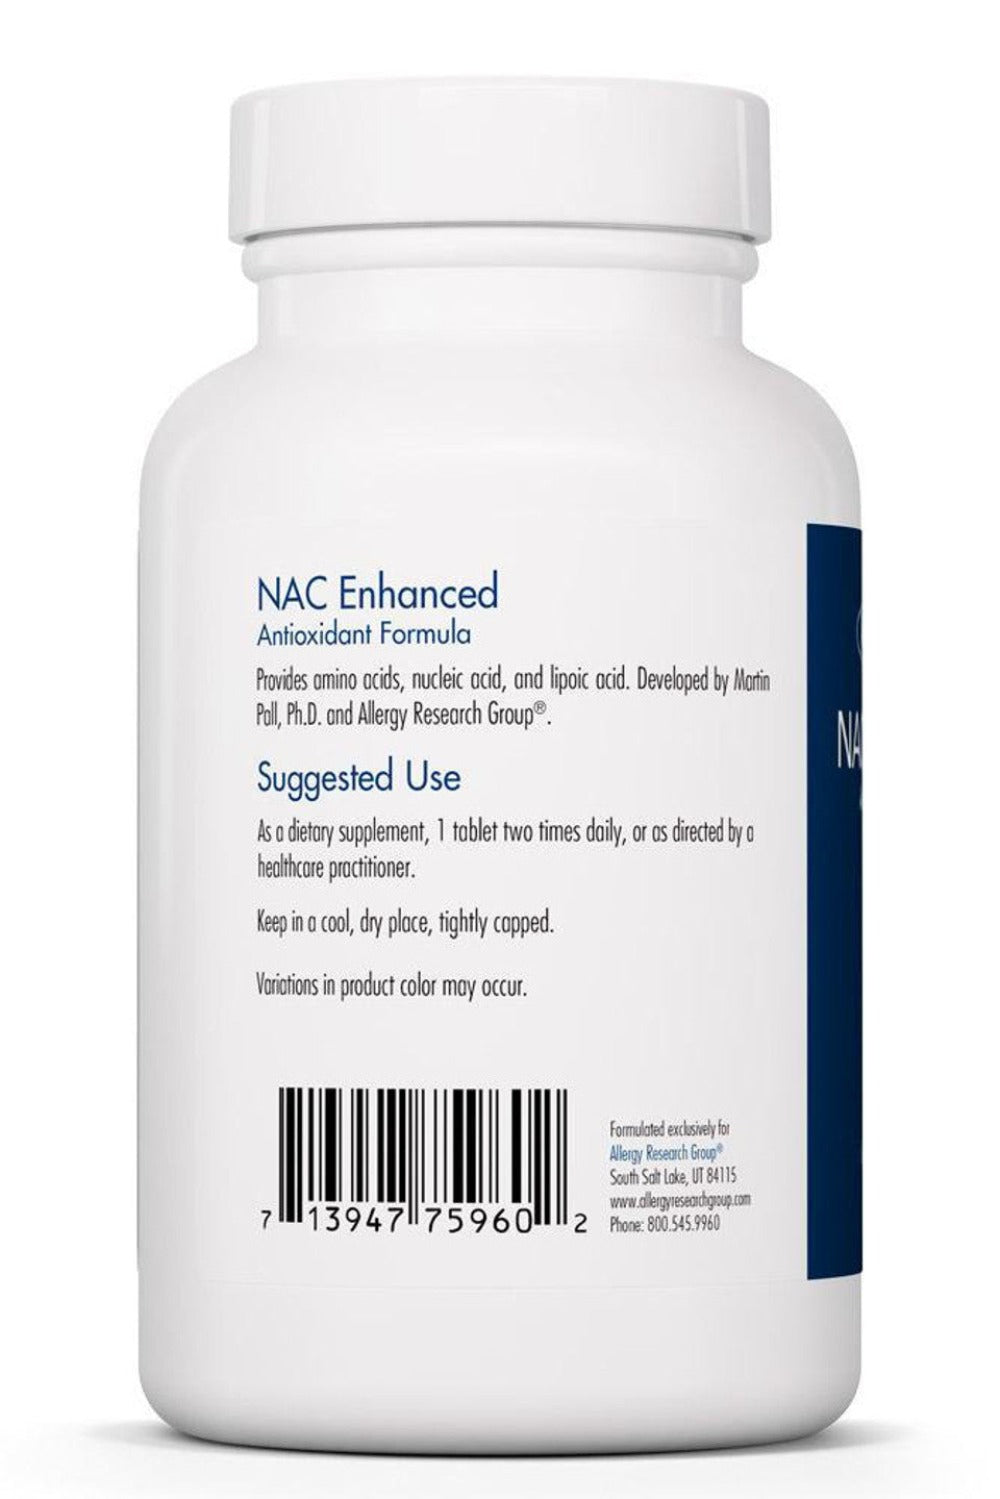 Allergy Research Group NAC Enhanced Antioxidant - 90 tabs